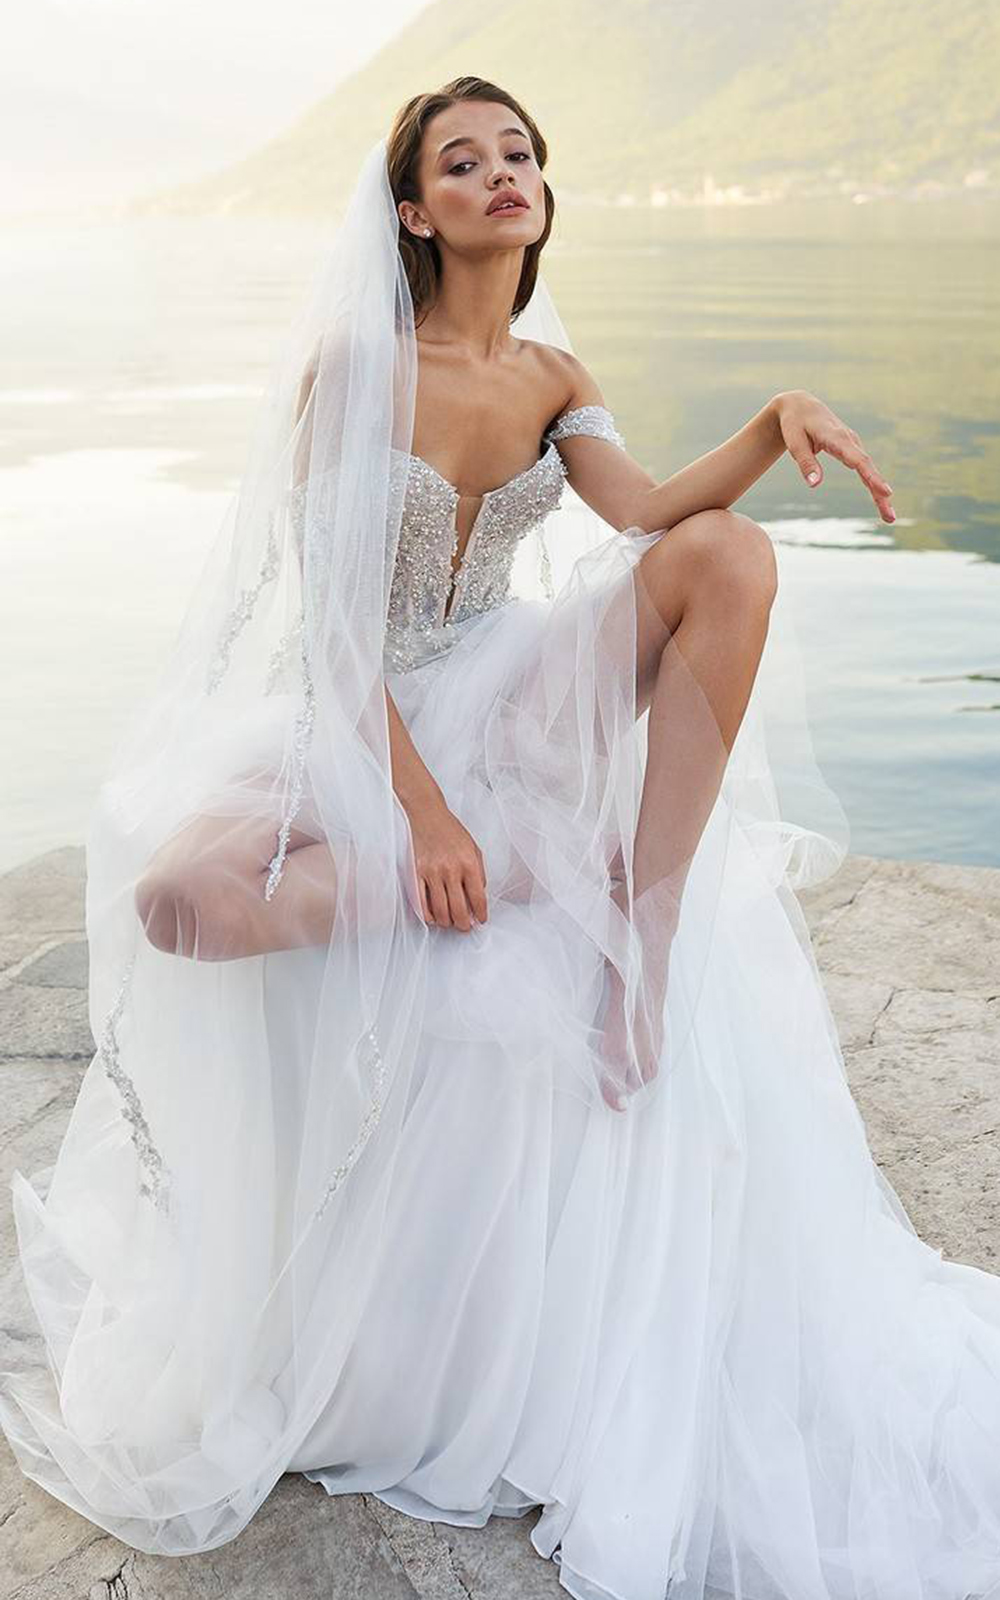 https://www.weddingforward.com/wp-content/uploads/2023/02/most-pinned-wedding-dresses.jpg